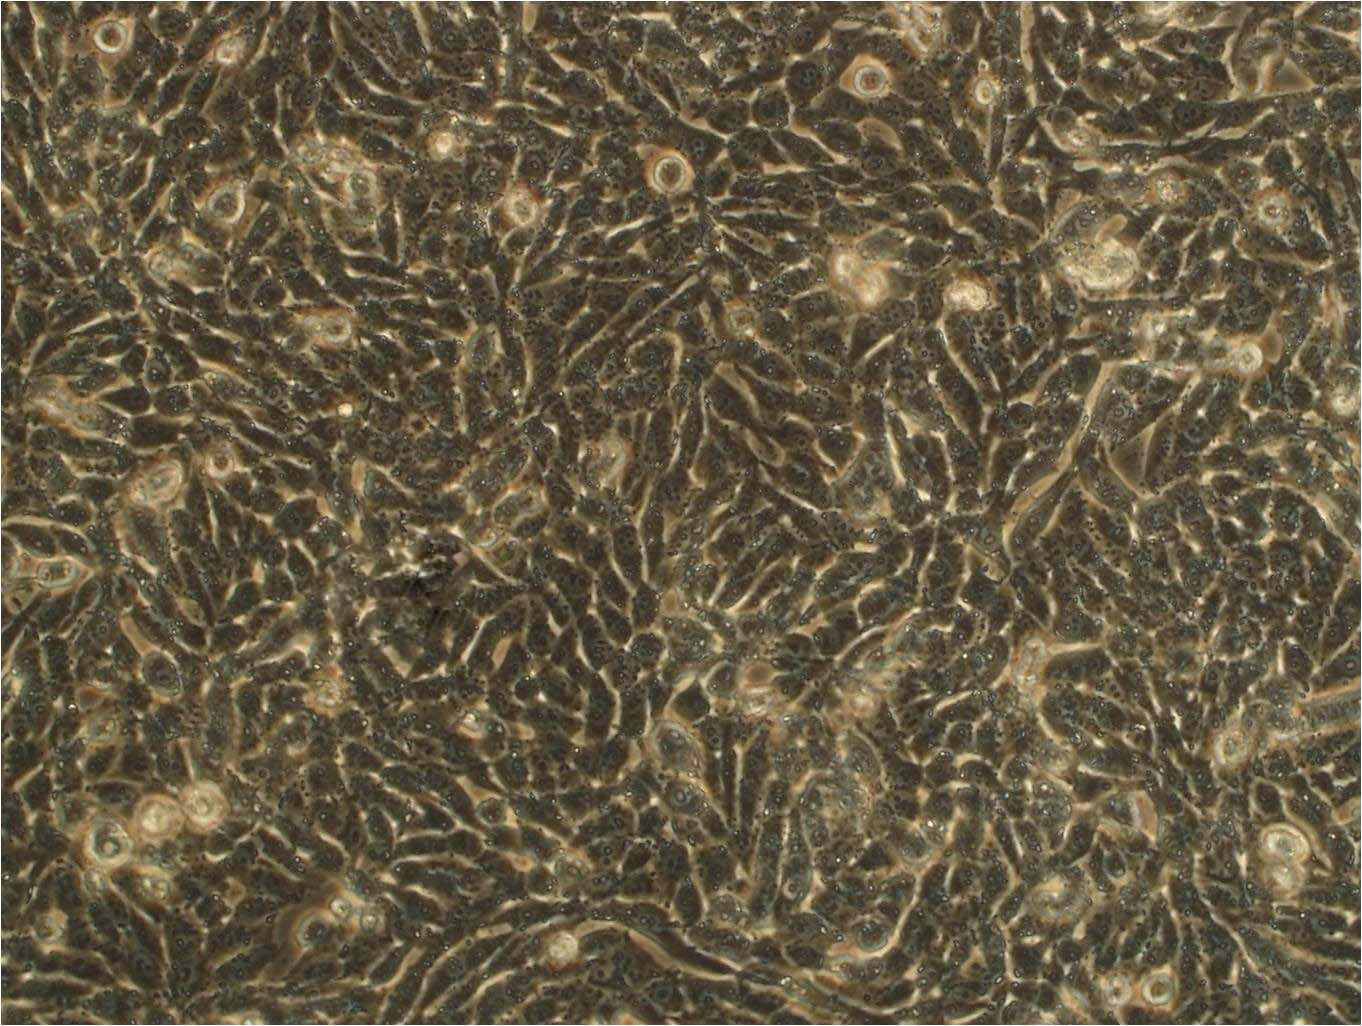 SK-N-BE(2)-M17 Cell|人成神经细胞